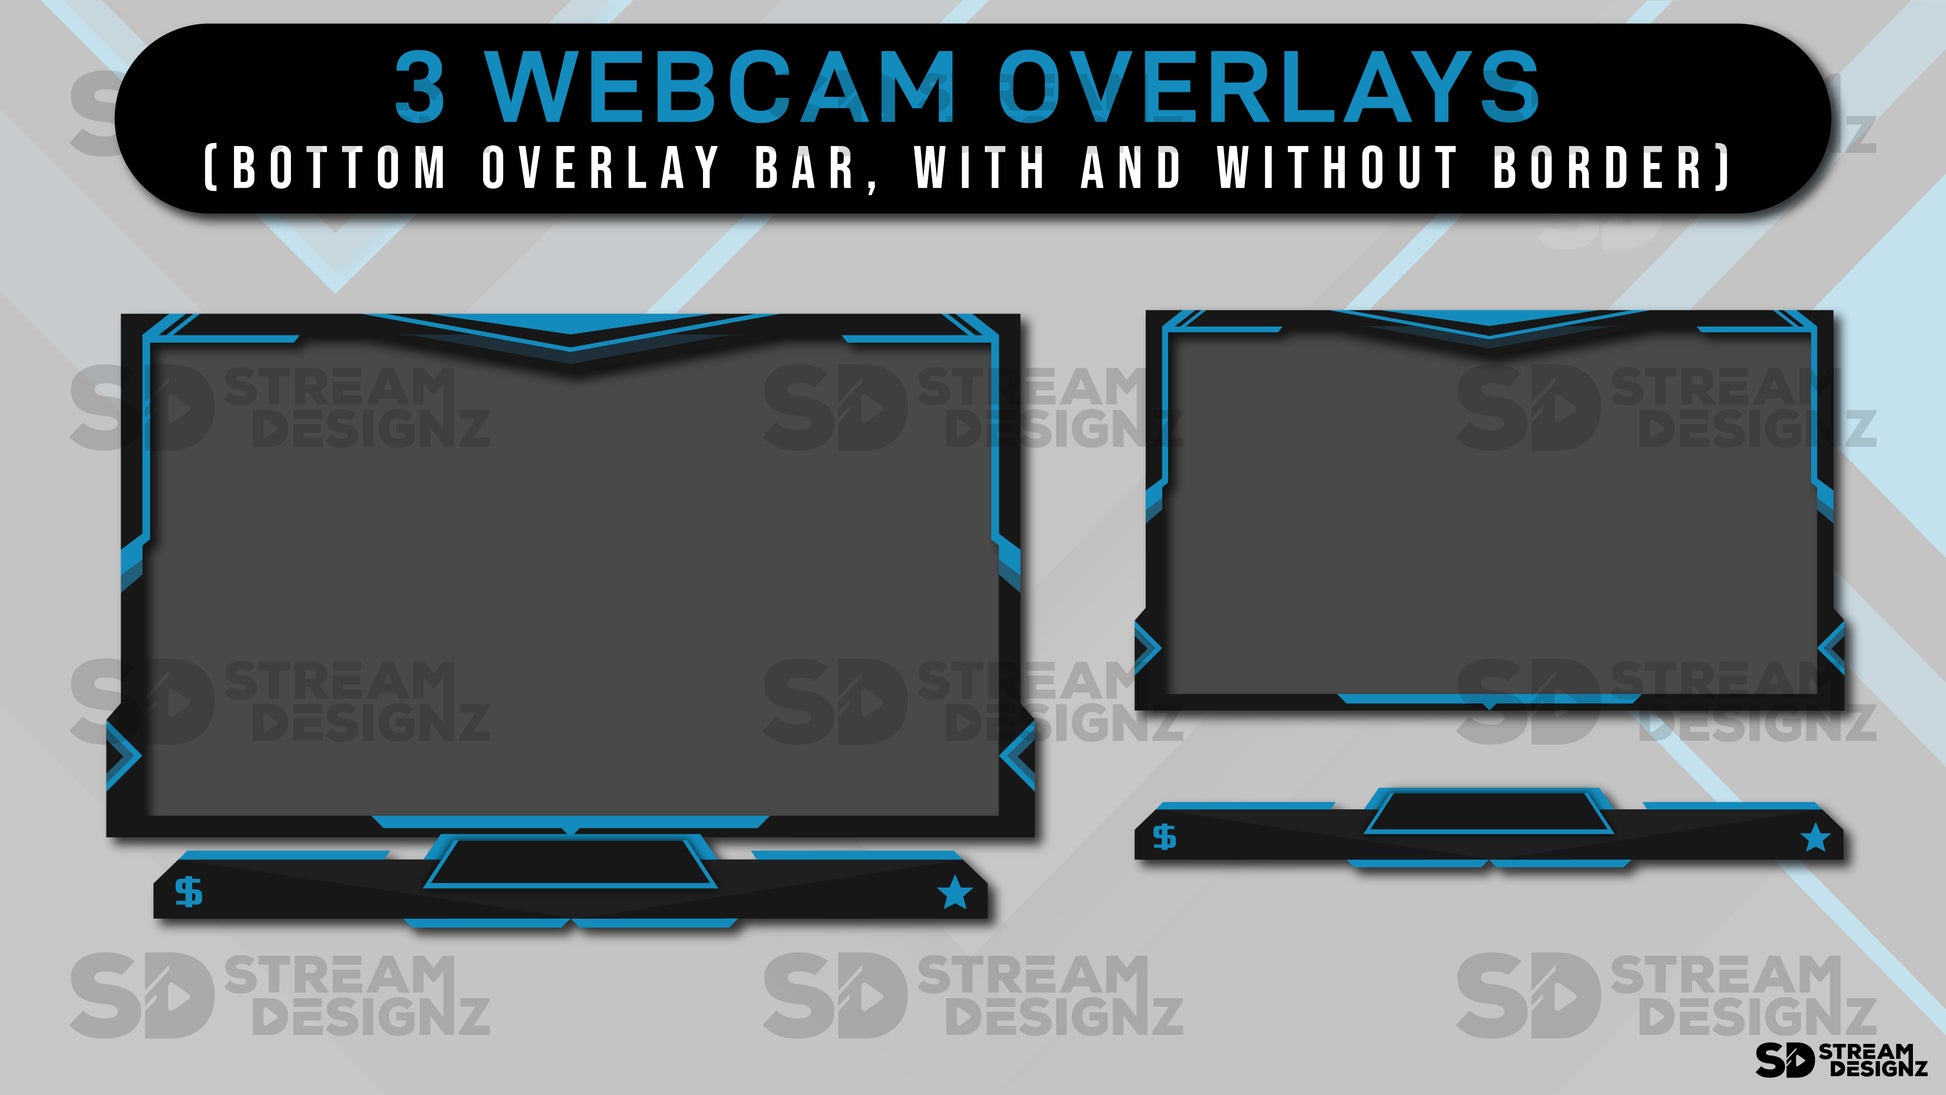 Static stream overlay package - electric - webcam overlays - stream designz